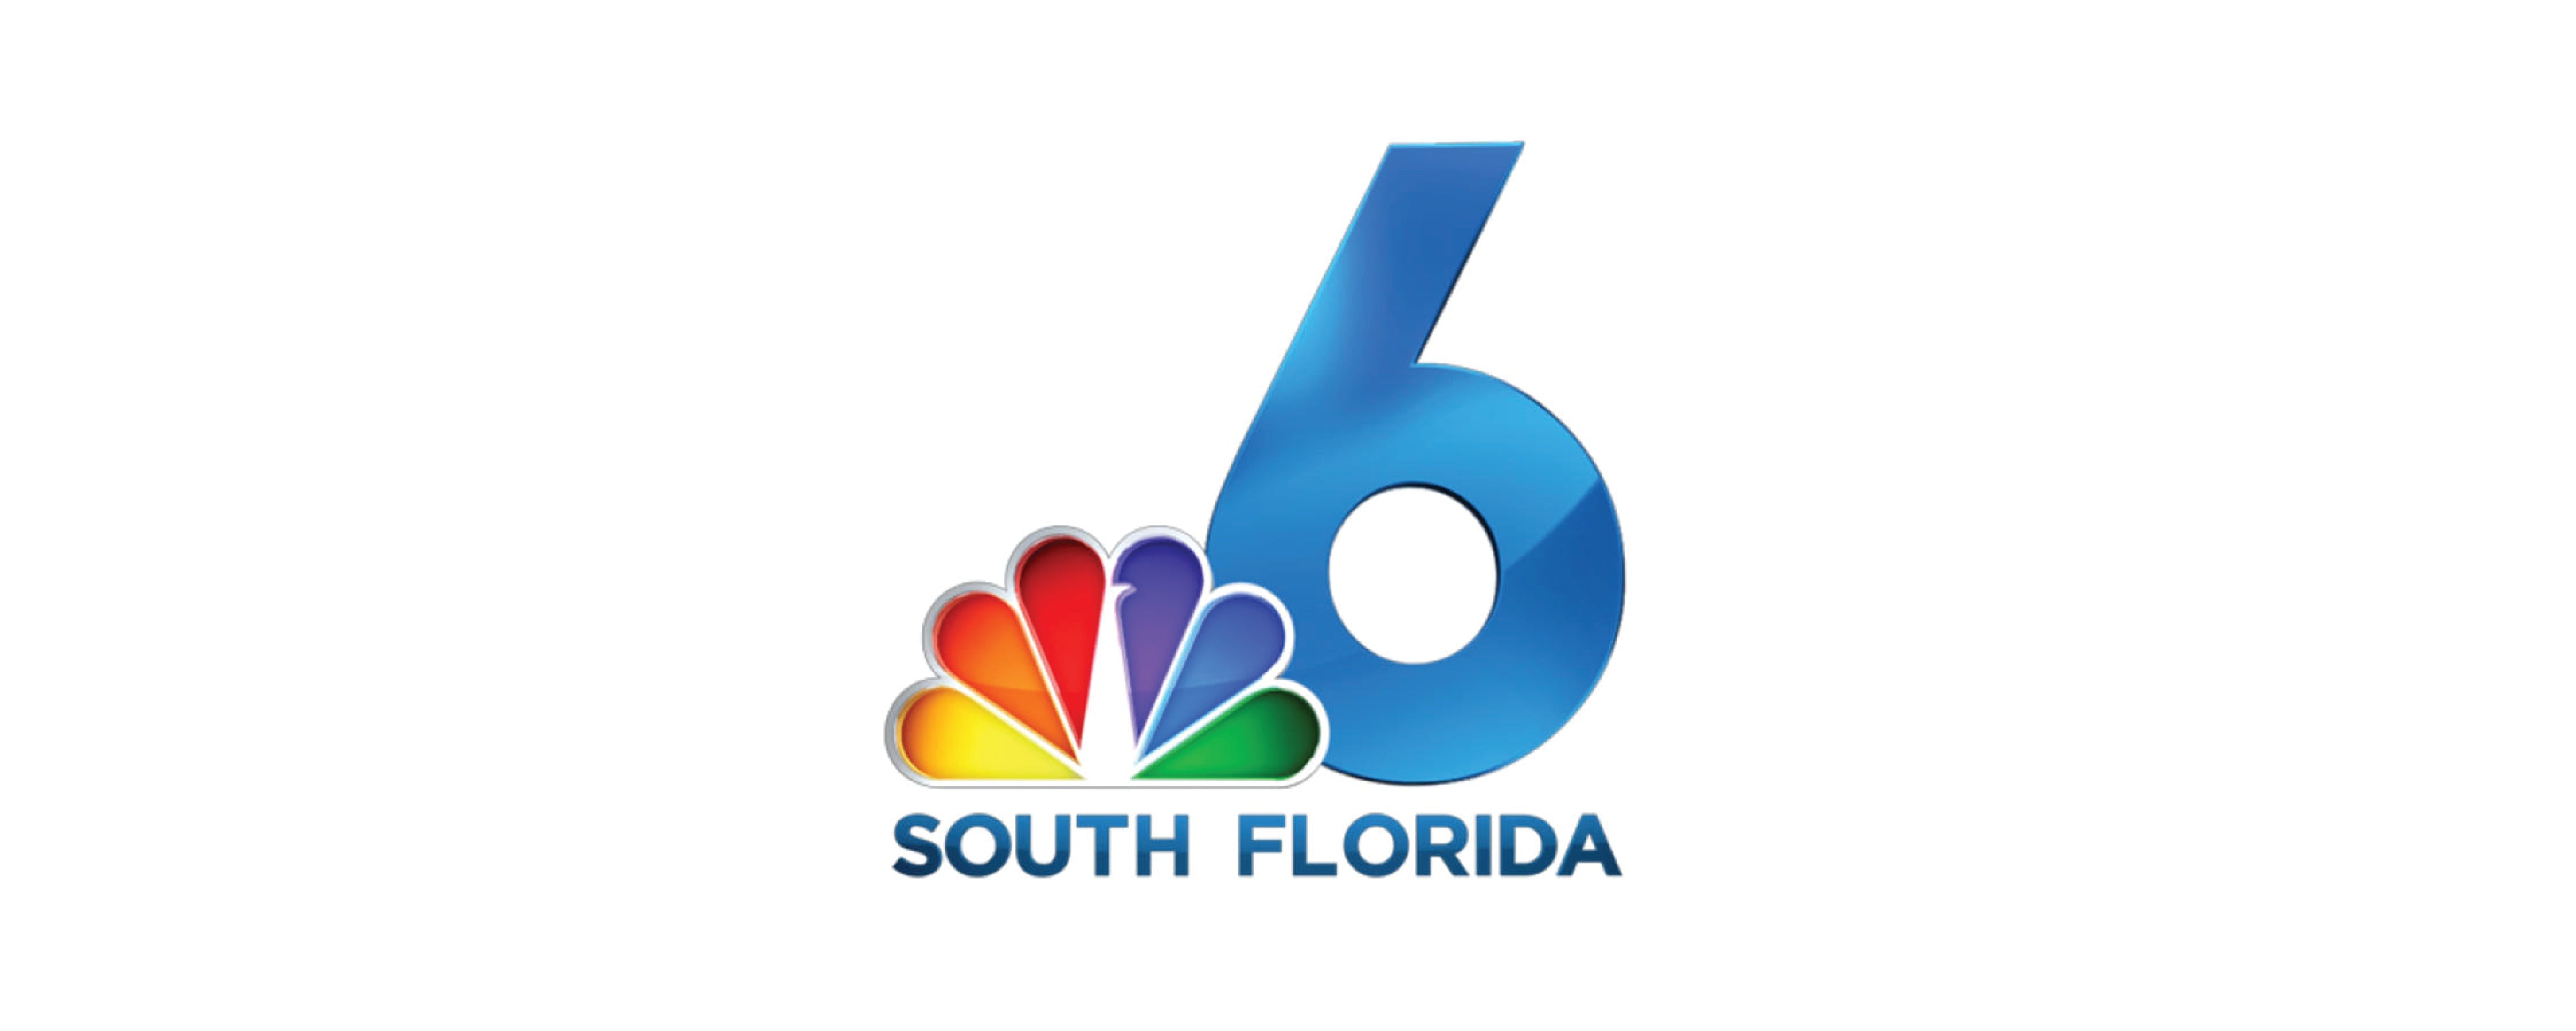 NBC South Florida Today Show